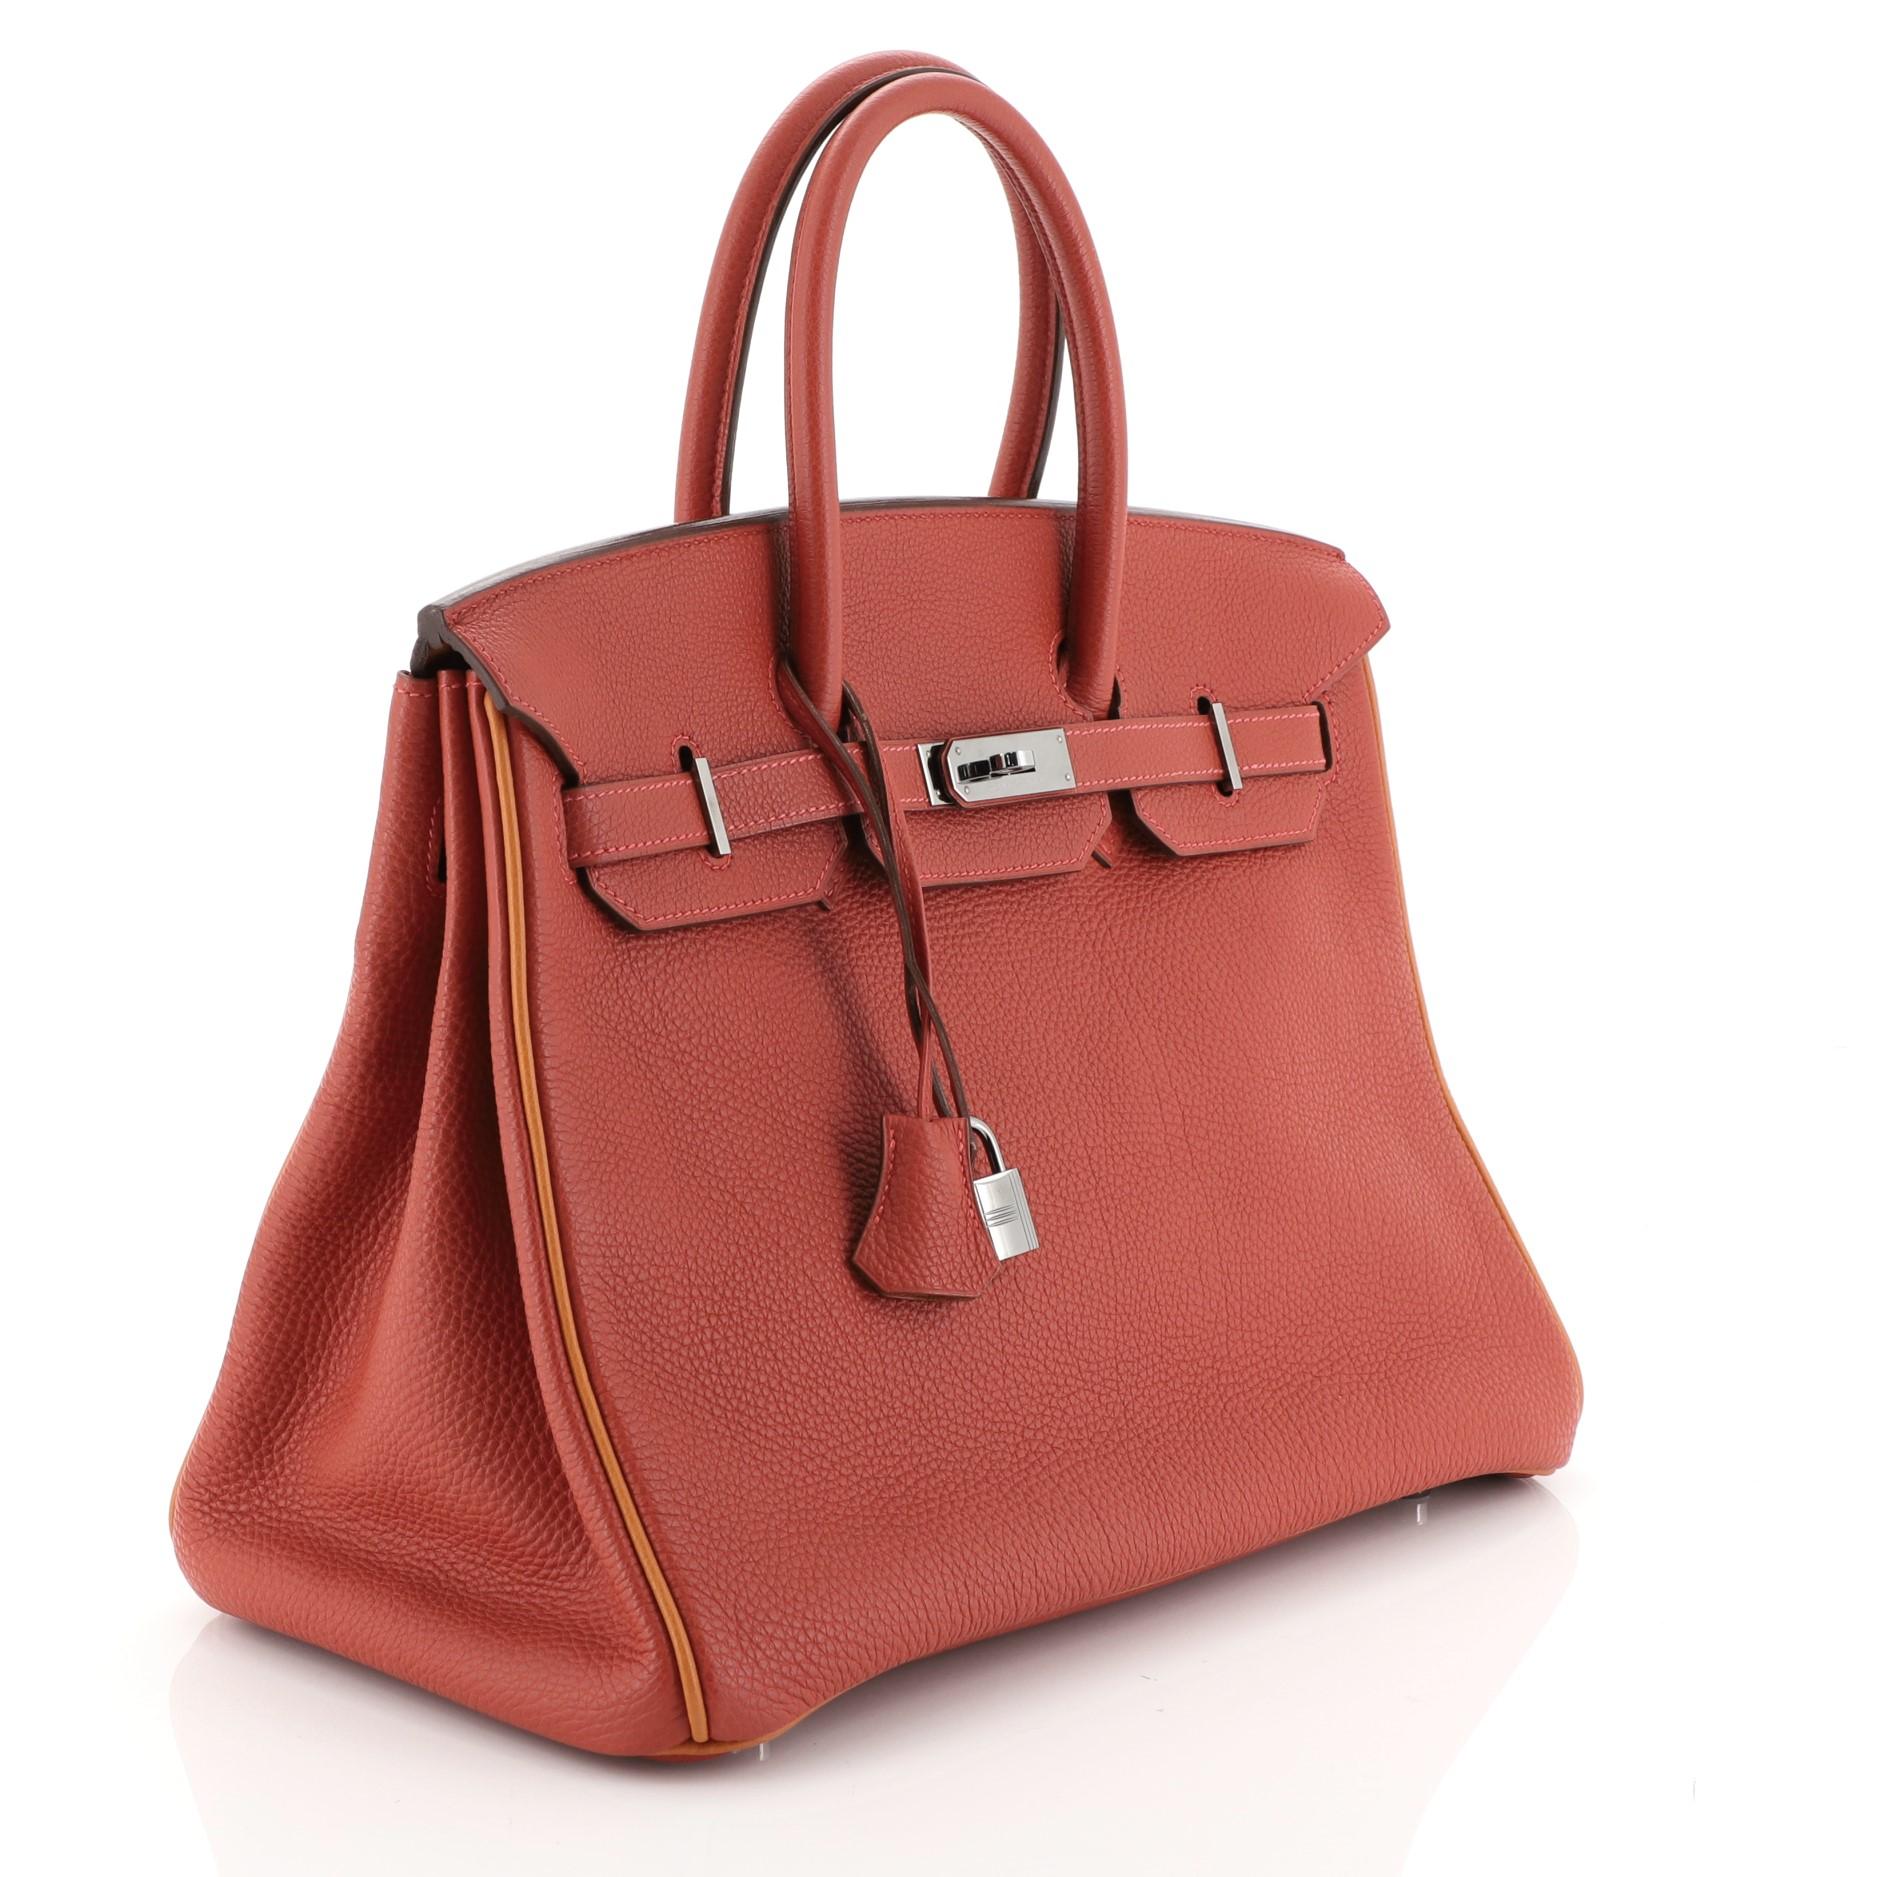 Red Hermes Birkin Handbag Bicolor Togo with Ruthenium Hardware 35